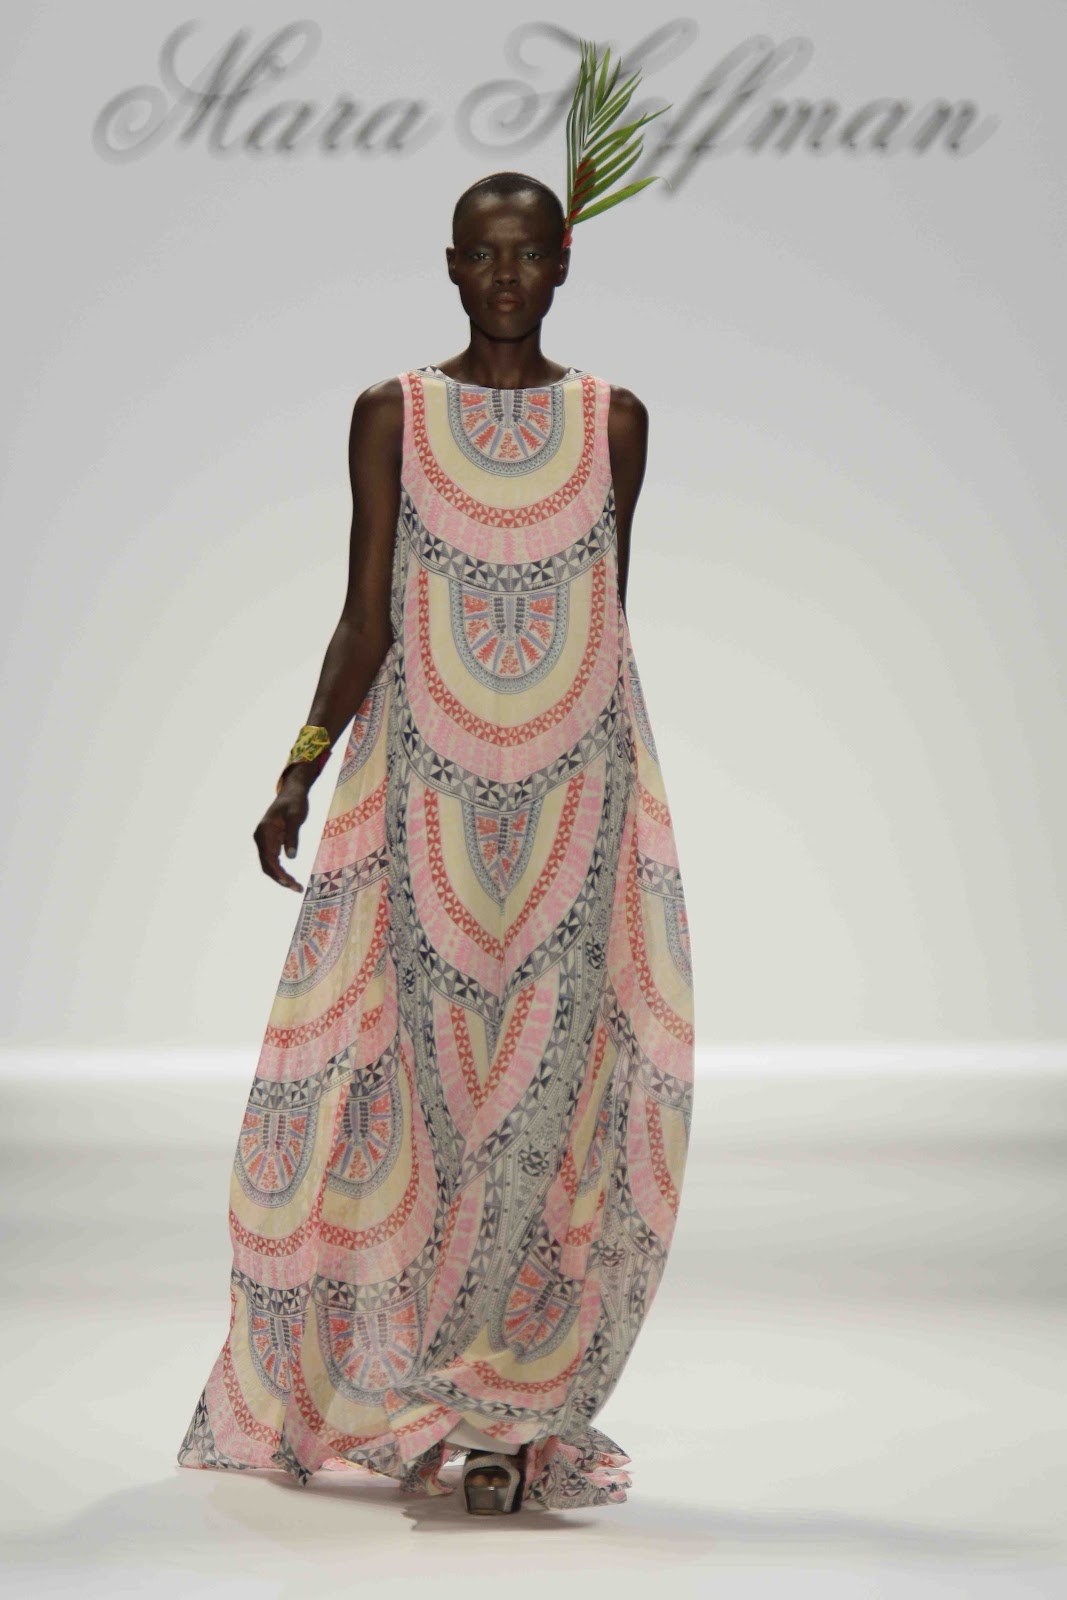 New York Fashion Week: Mara Hoffman Spring 2013 Goes Tropic